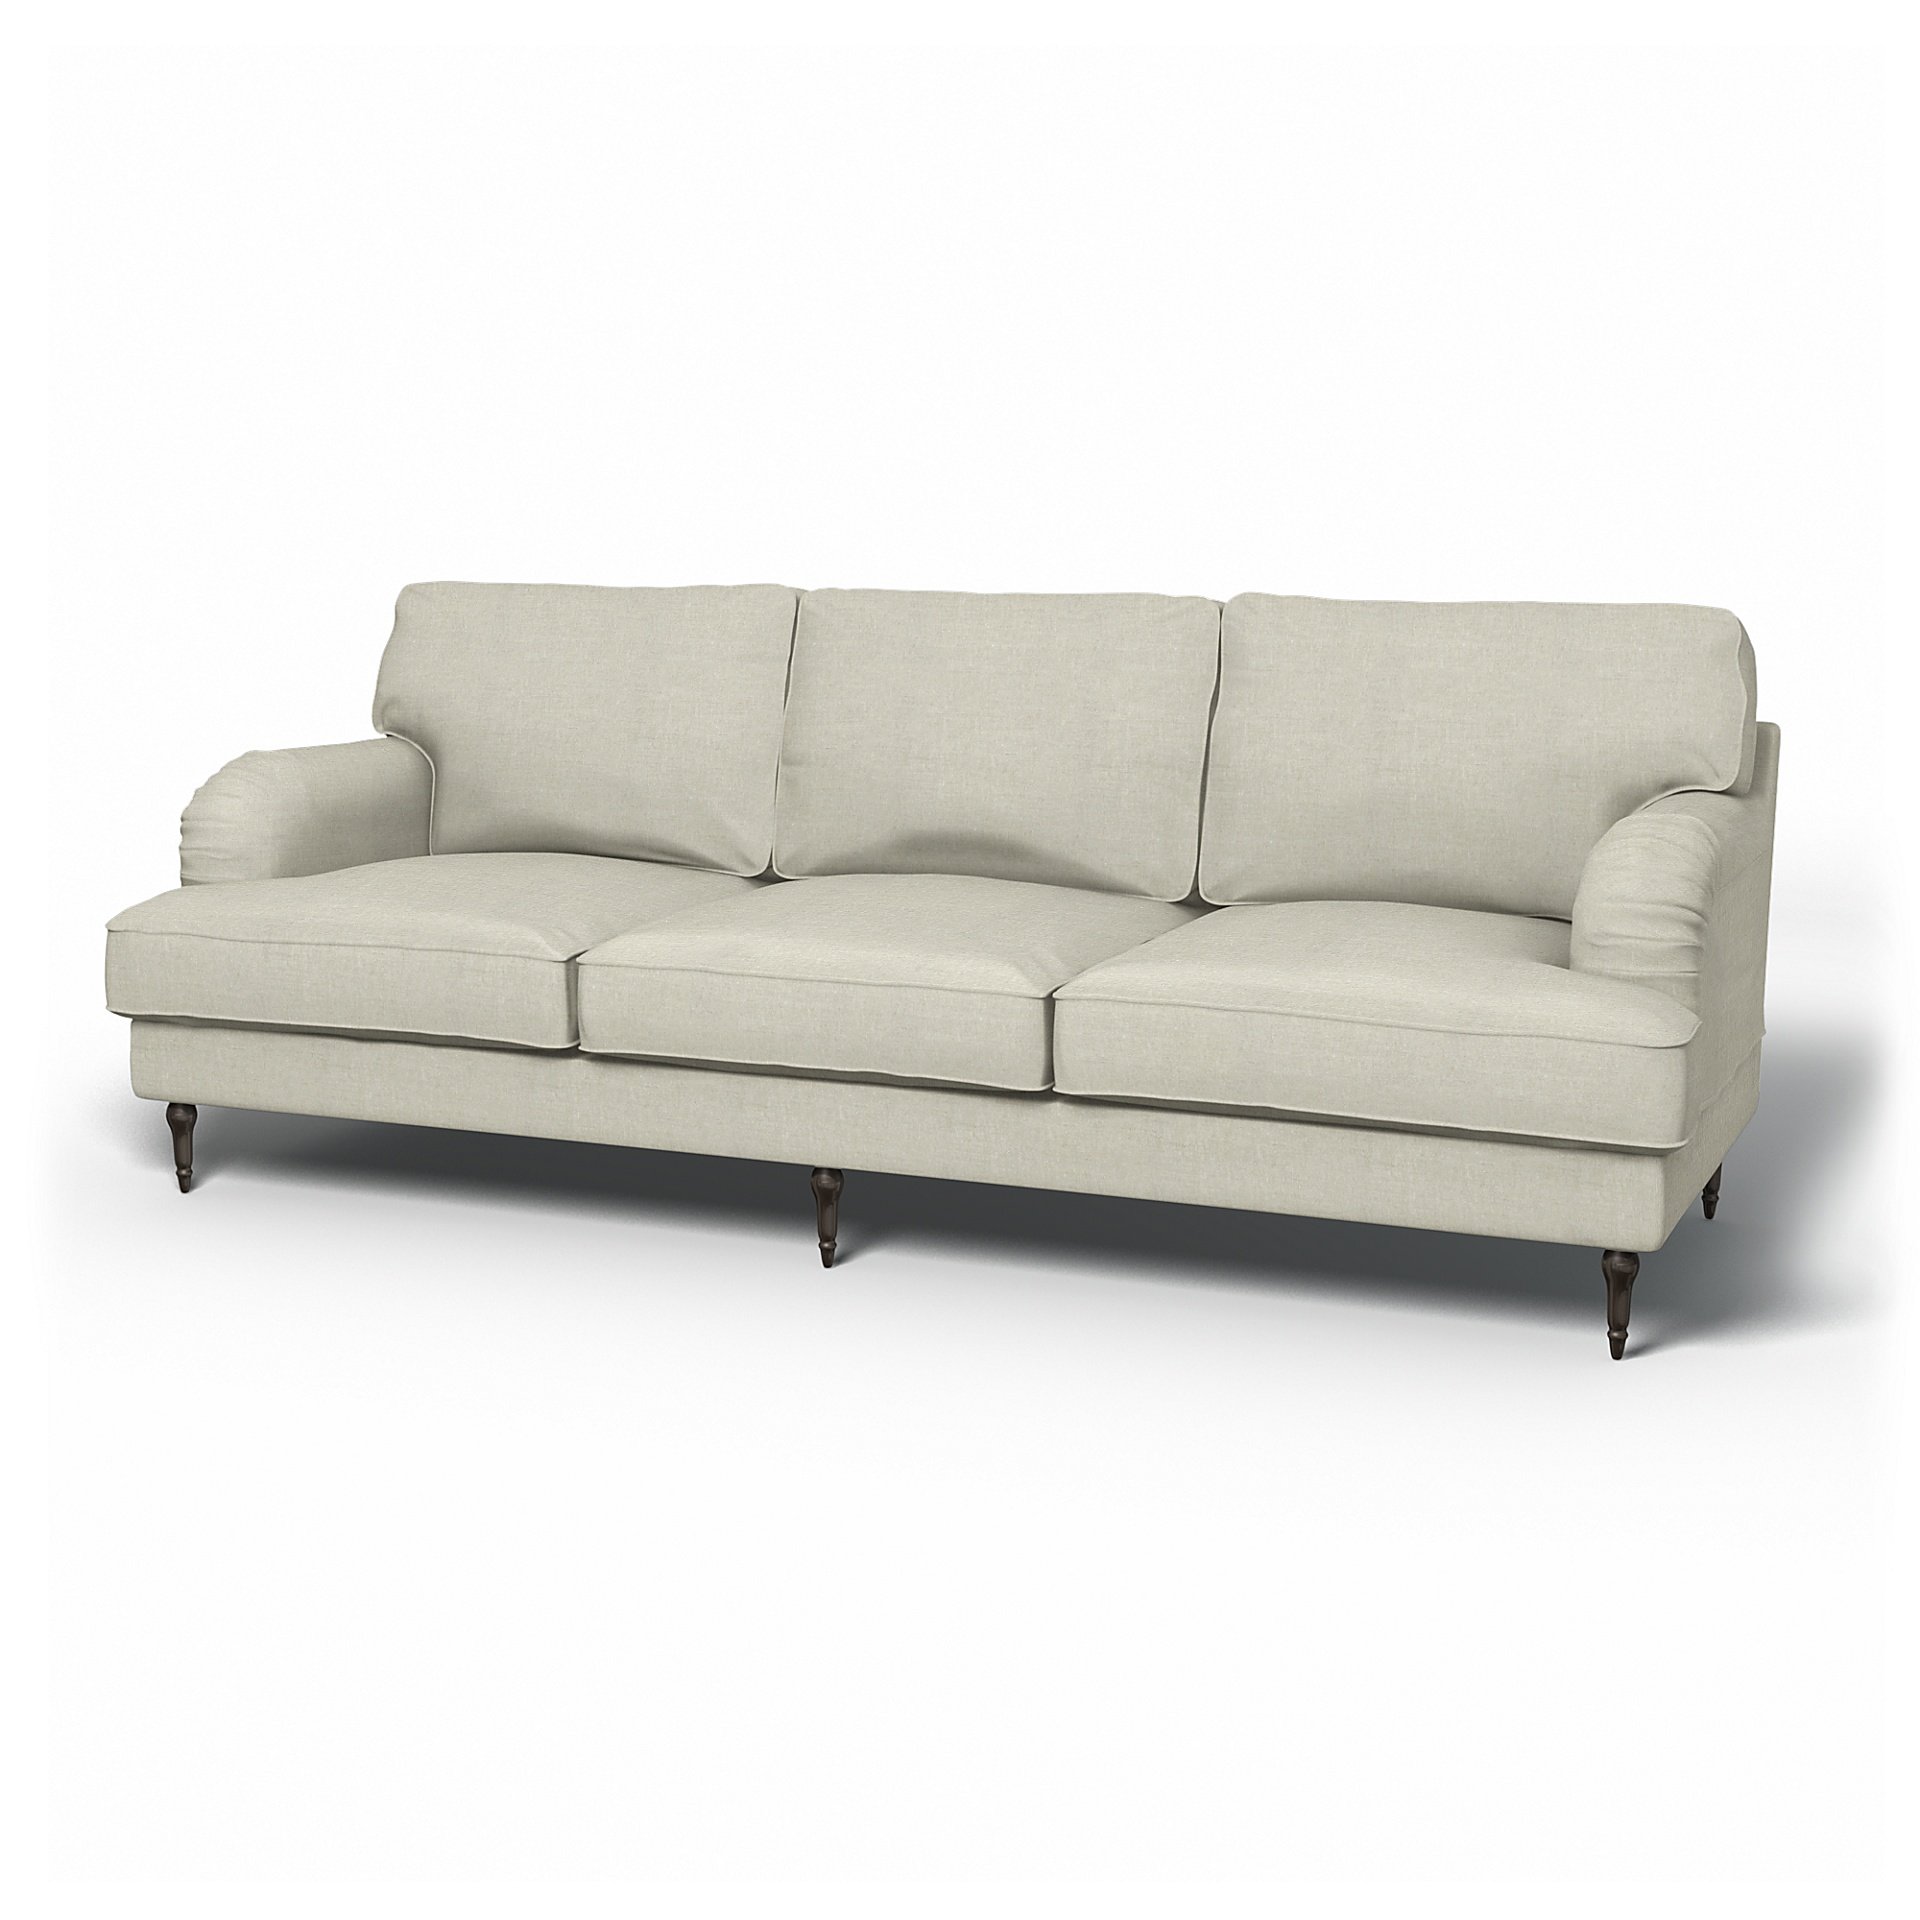 Ikea STOCKSUND 3.5 Seat Sofa Cover Slipcover Ljungen Beige NEW in Box! 90.5" 